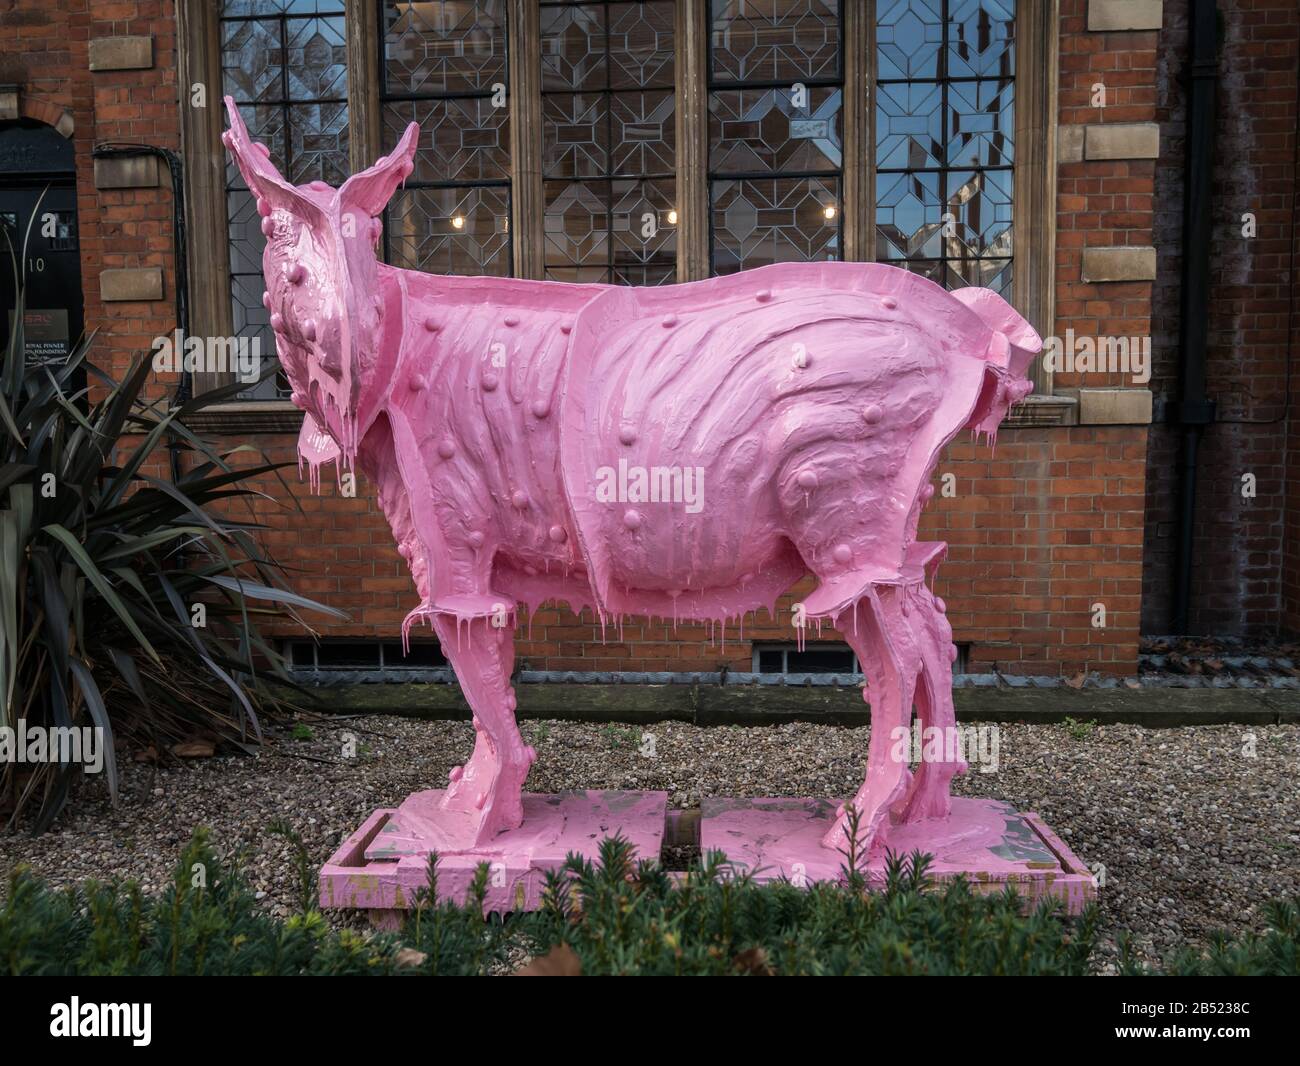 Doppelganger (Pink Rocinante) by Michael Joo, London, UK Stock Photo